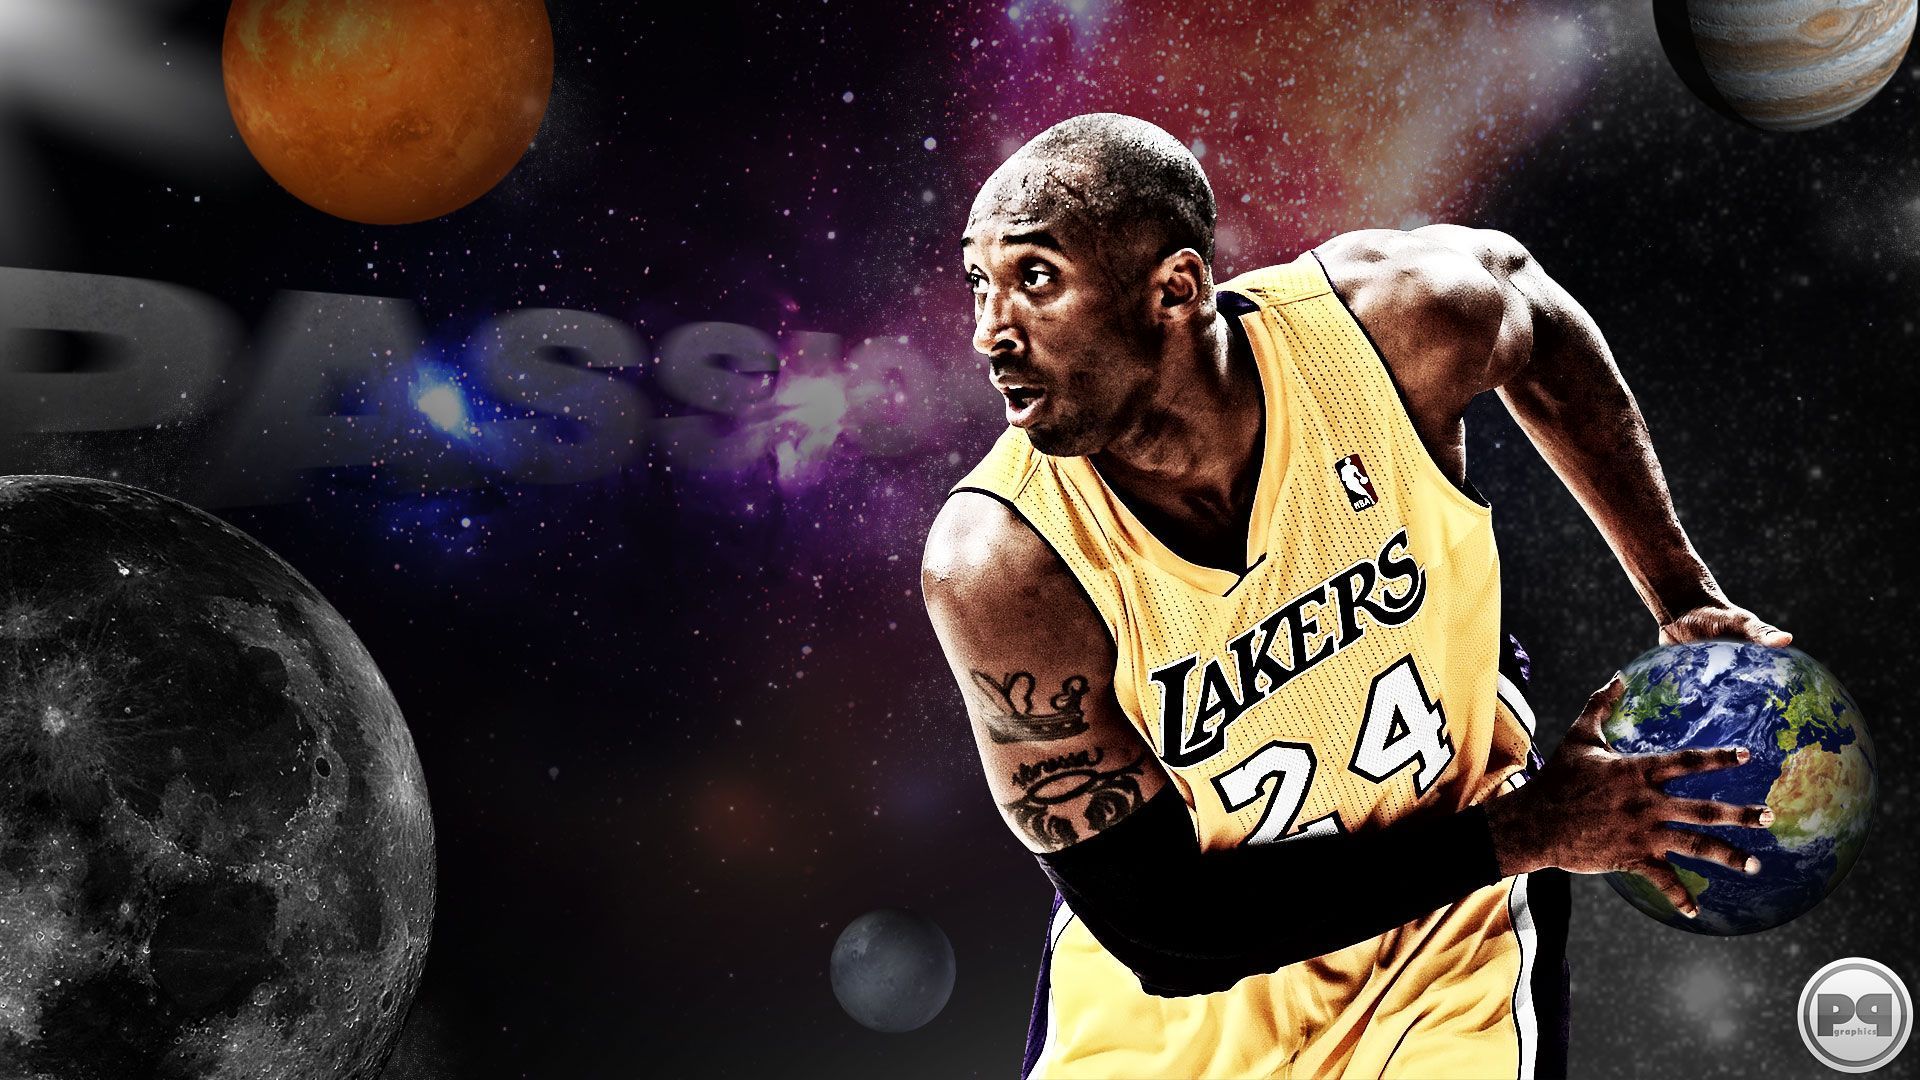 HD Quality NBA Basketball Kobe Bryant Wallpaper 21 - SiWallpaper 13650